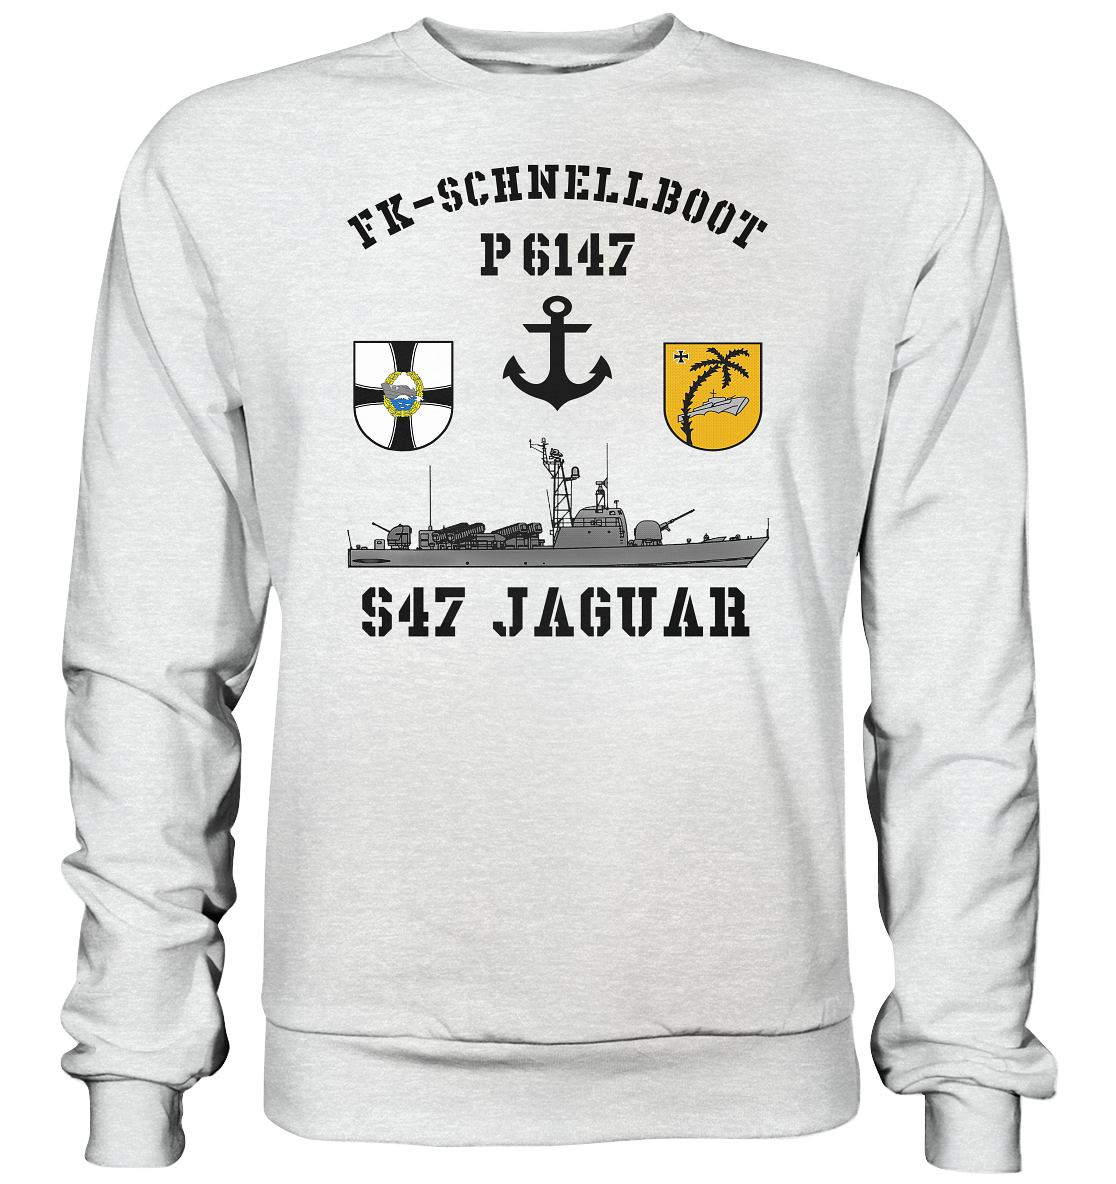 P6147 S47 JAGUAR - Premium Sweatshirt